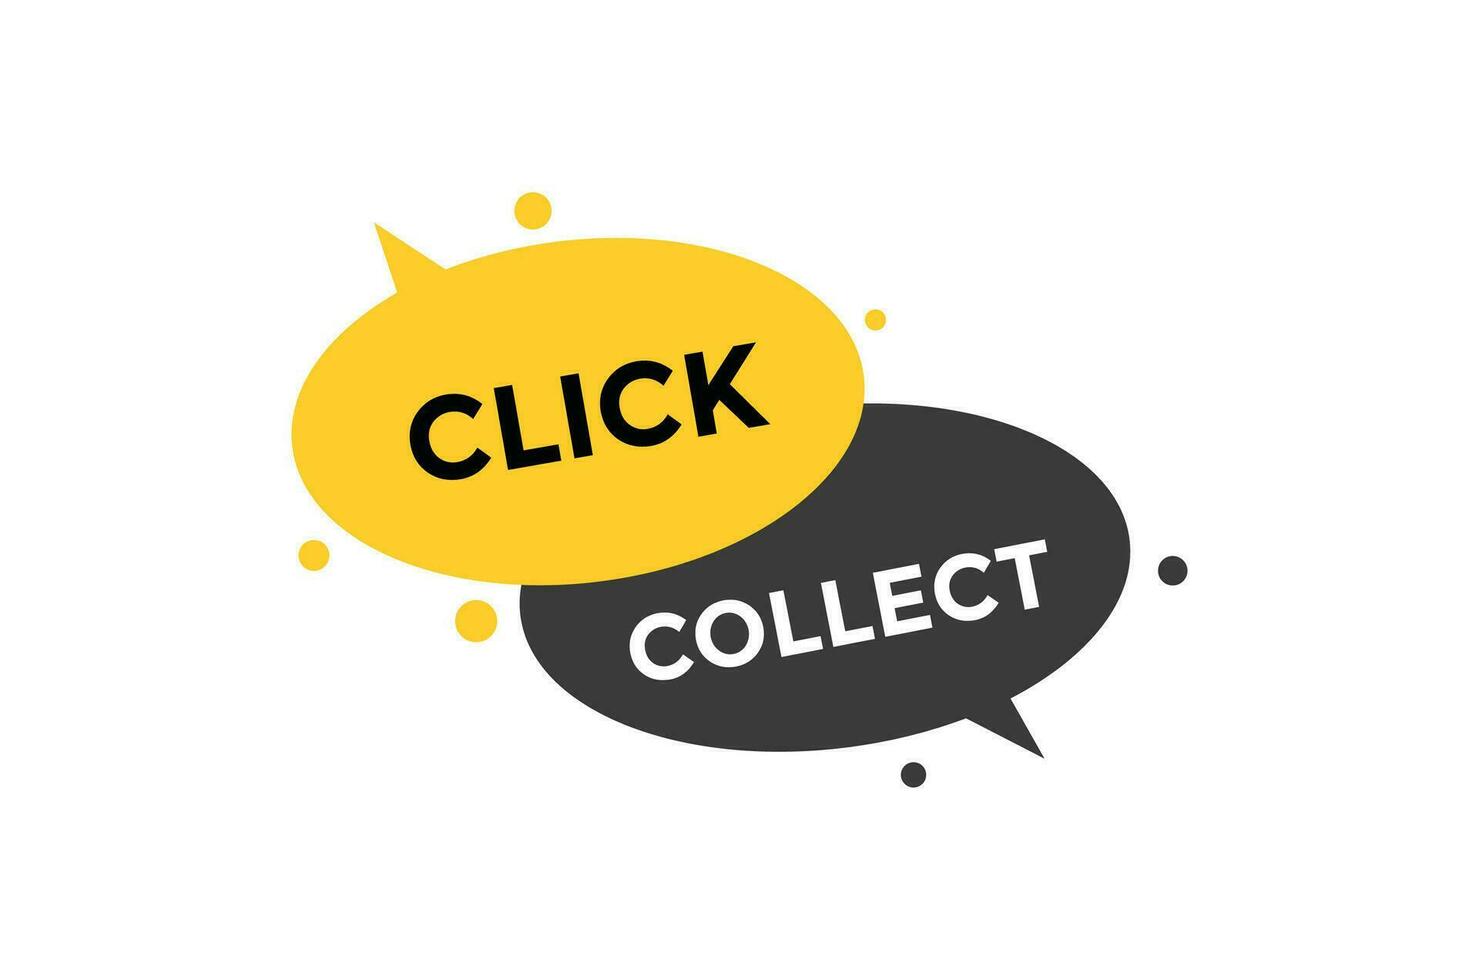 Click collect button web banner templates. Vector Illustration